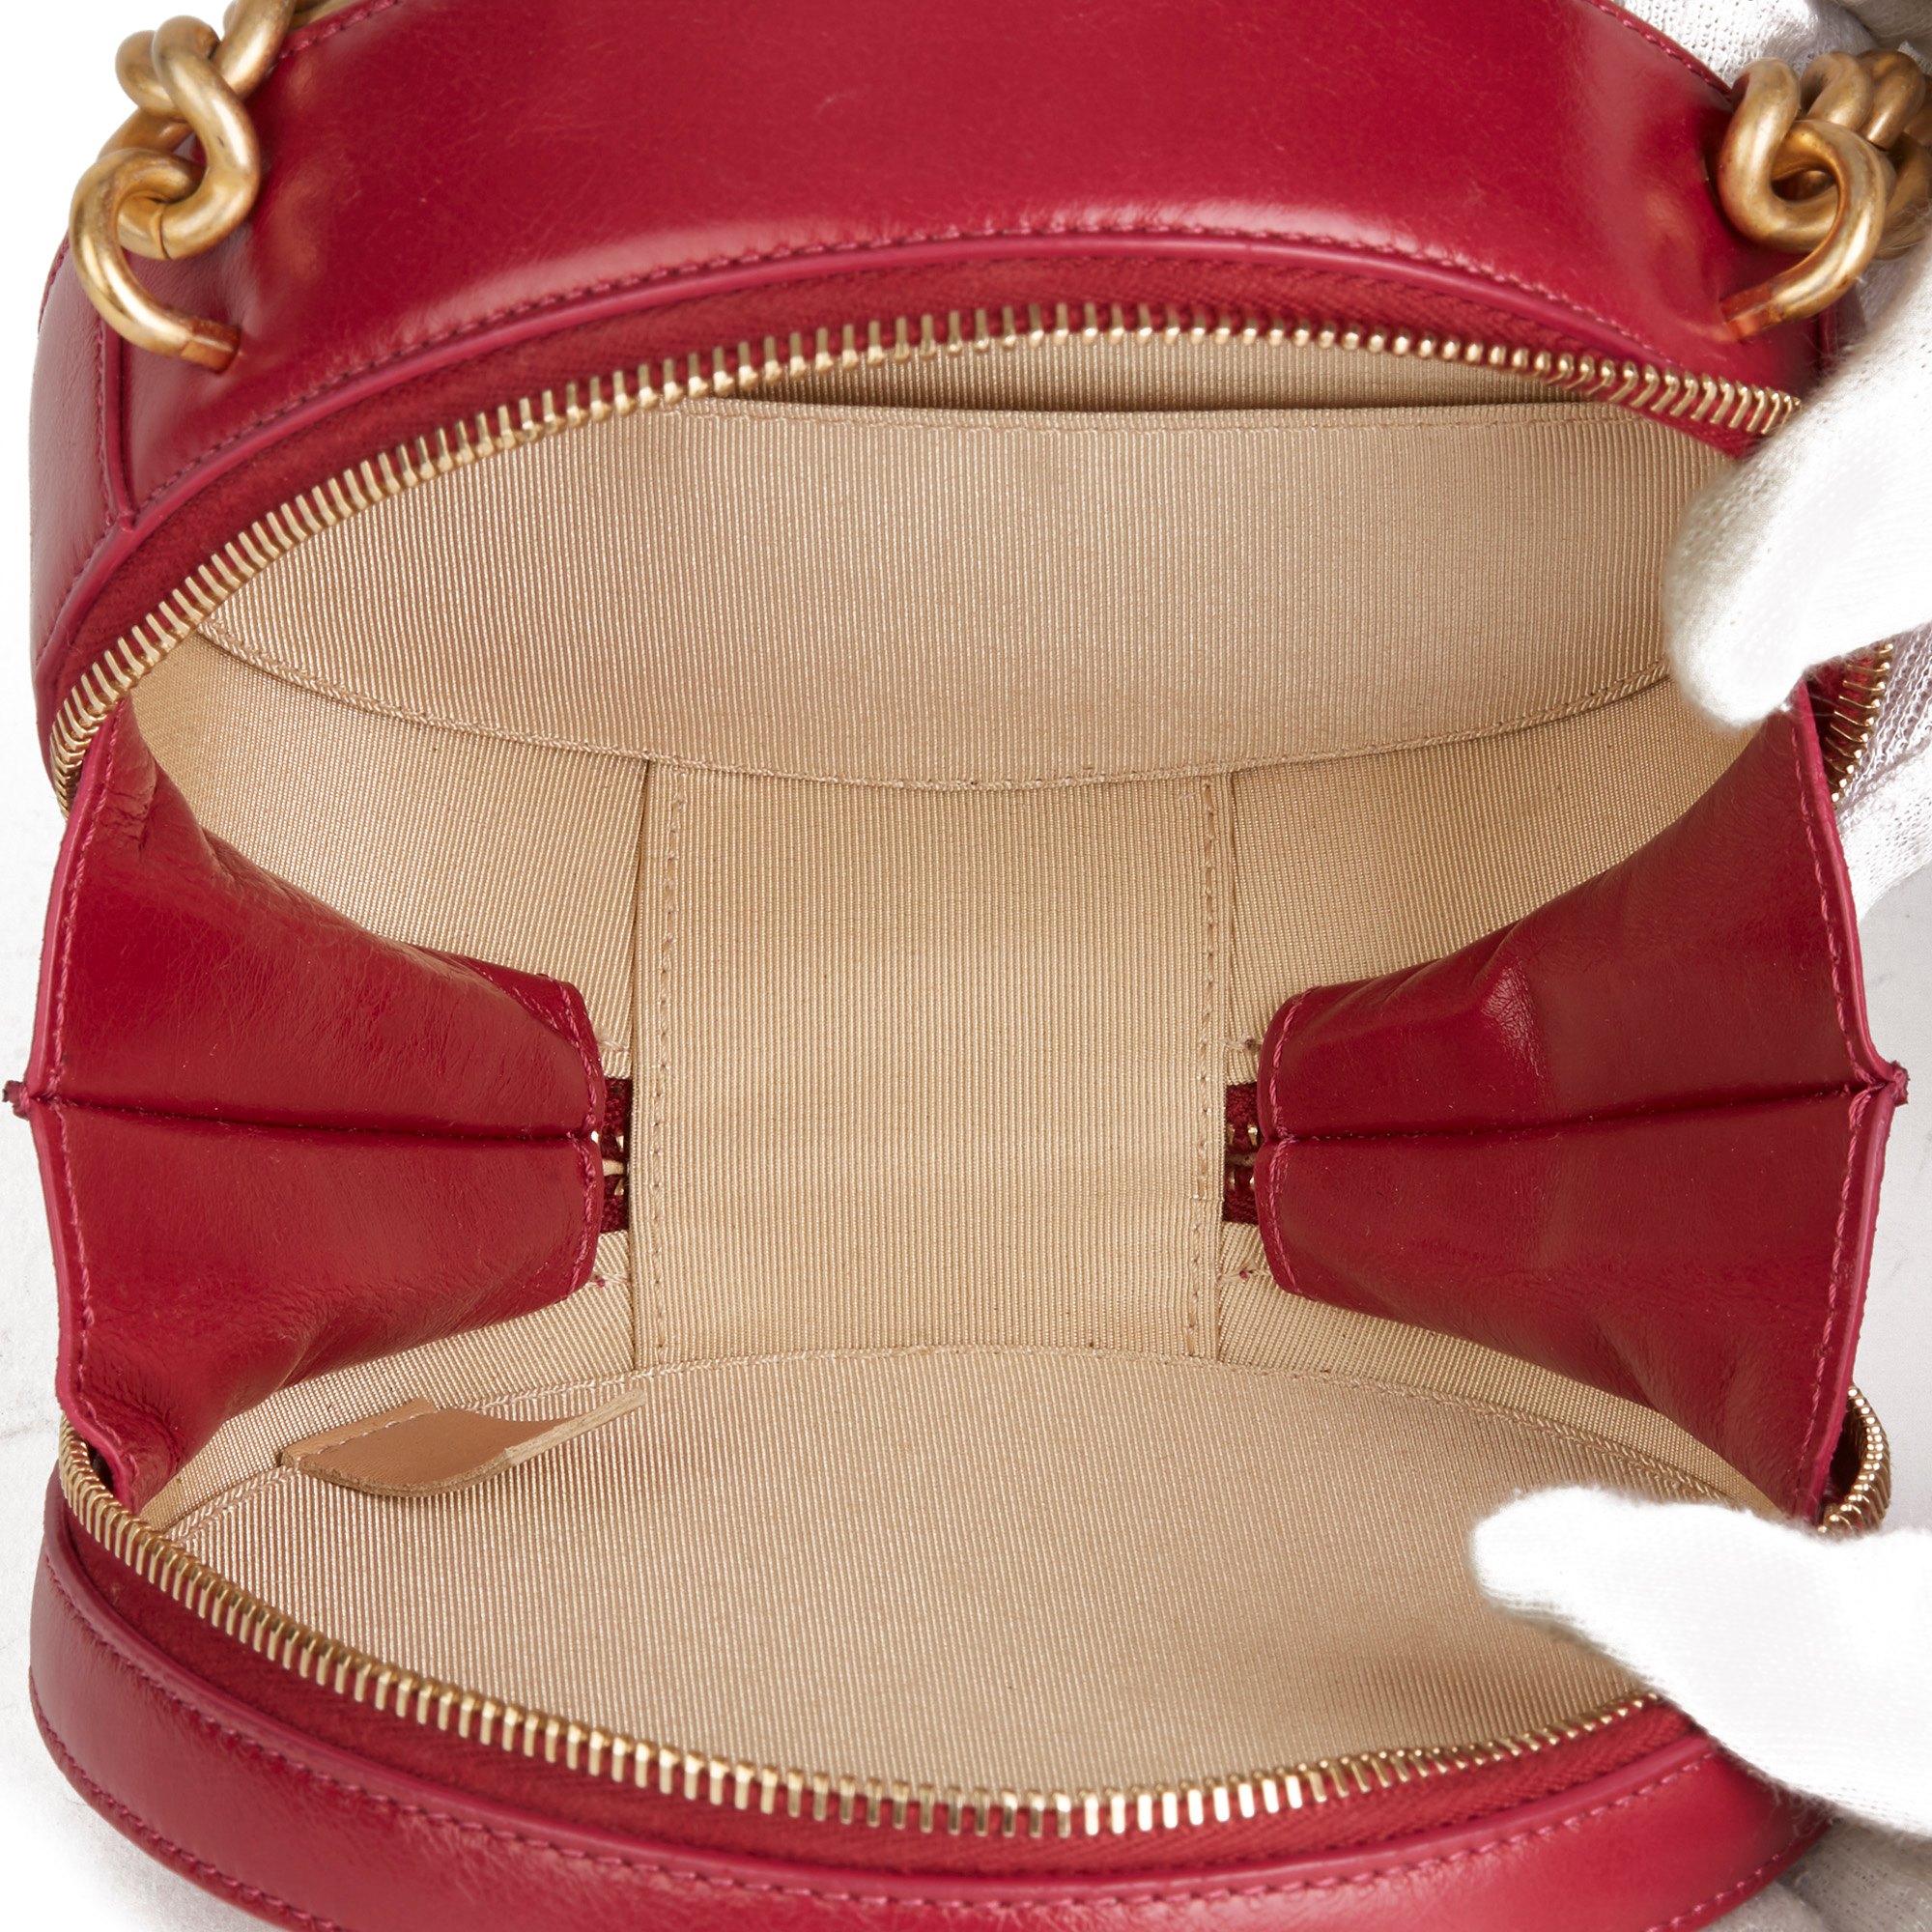 Chanel Raspberry Glazed Calfskin Leather Round as Earth Bag